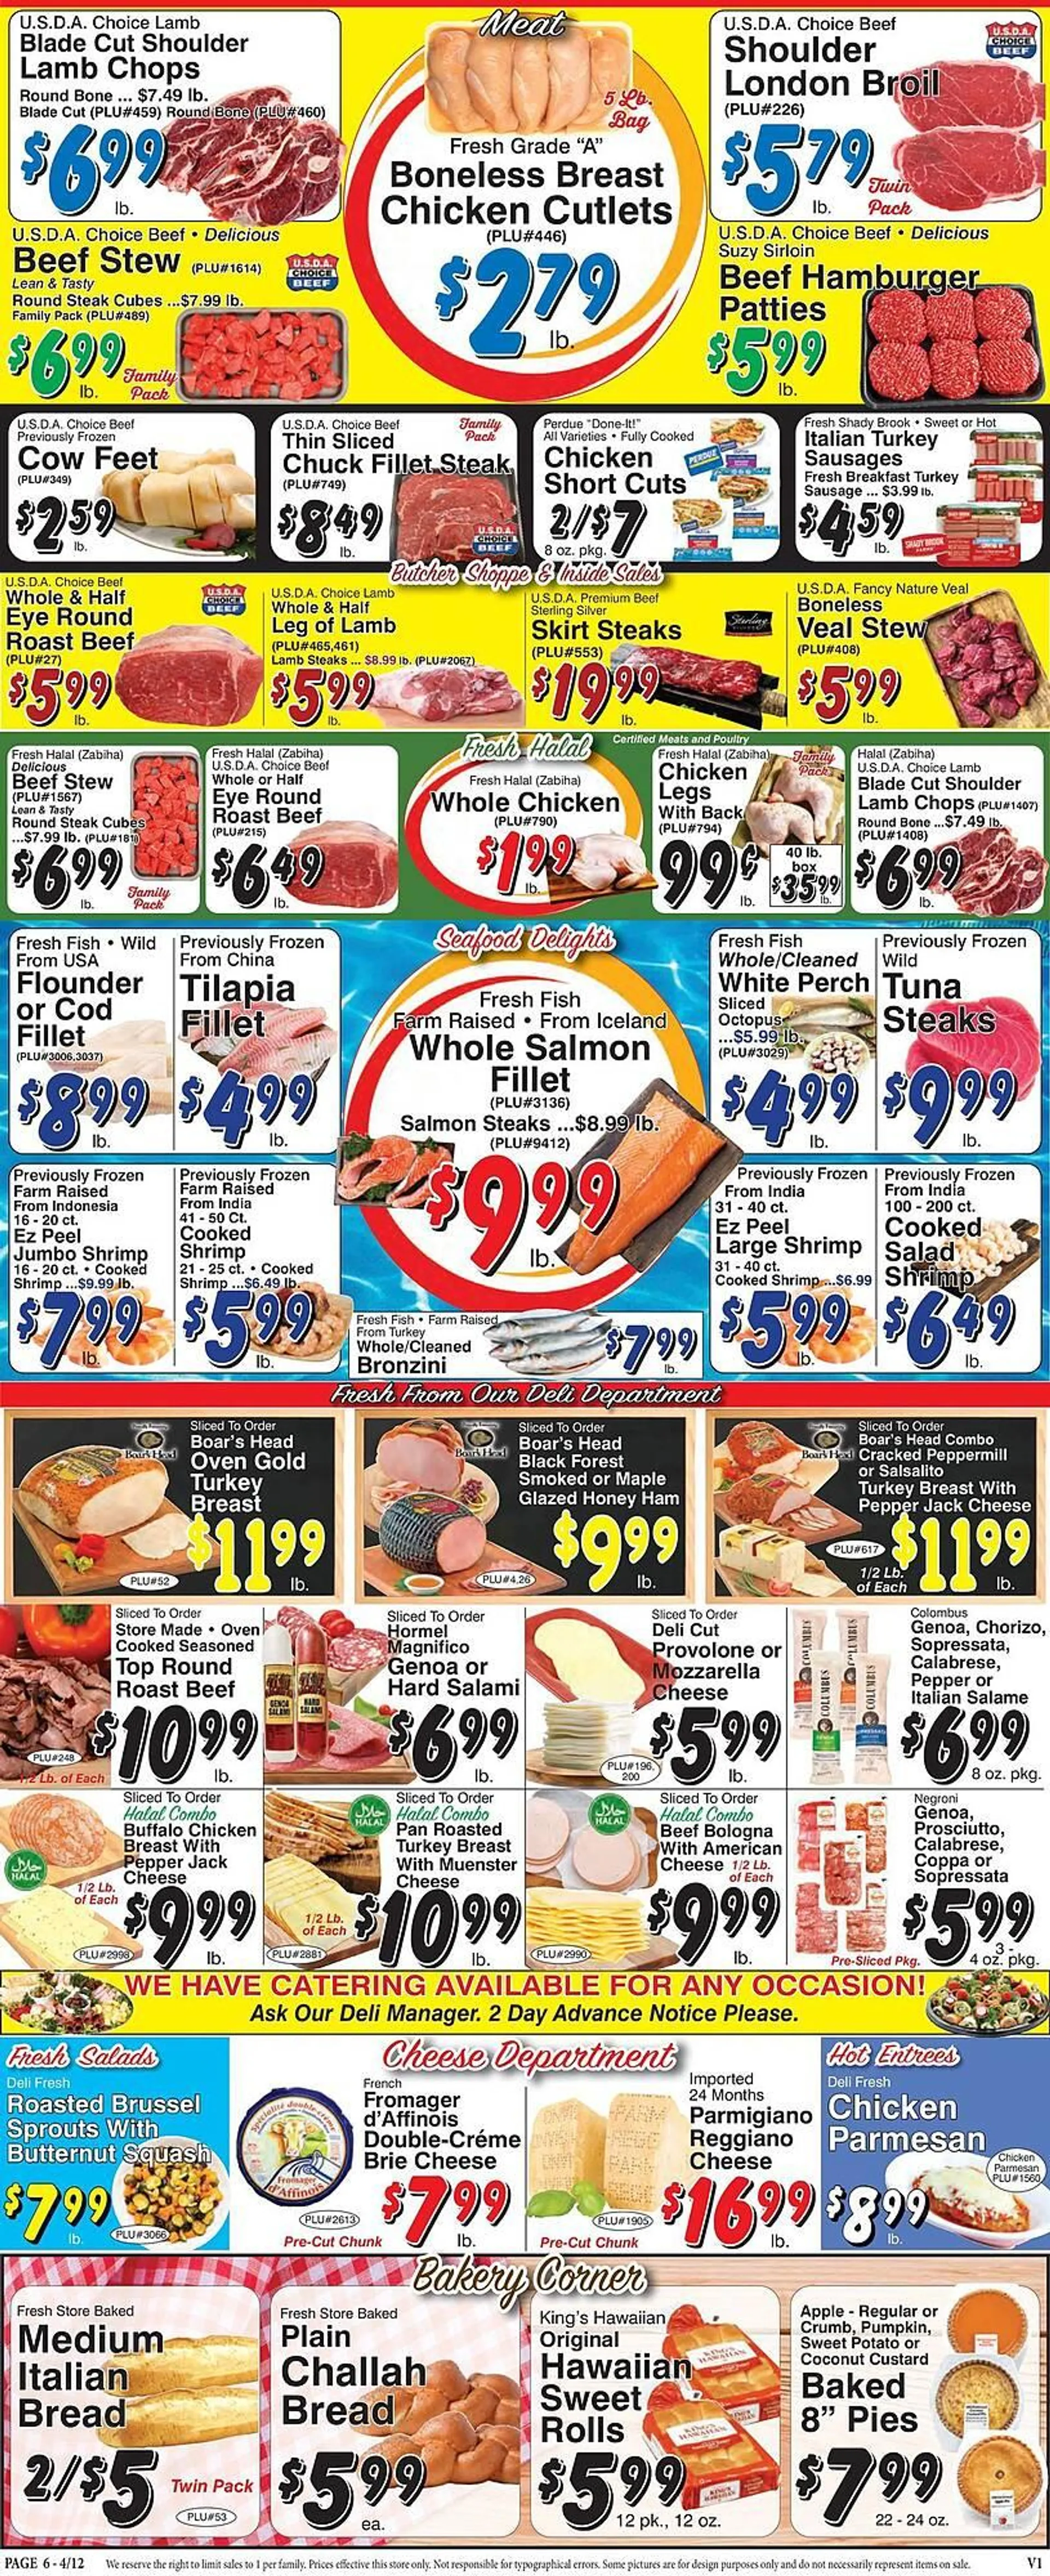 Trade Fair Supermarket Weekly Ad - 6